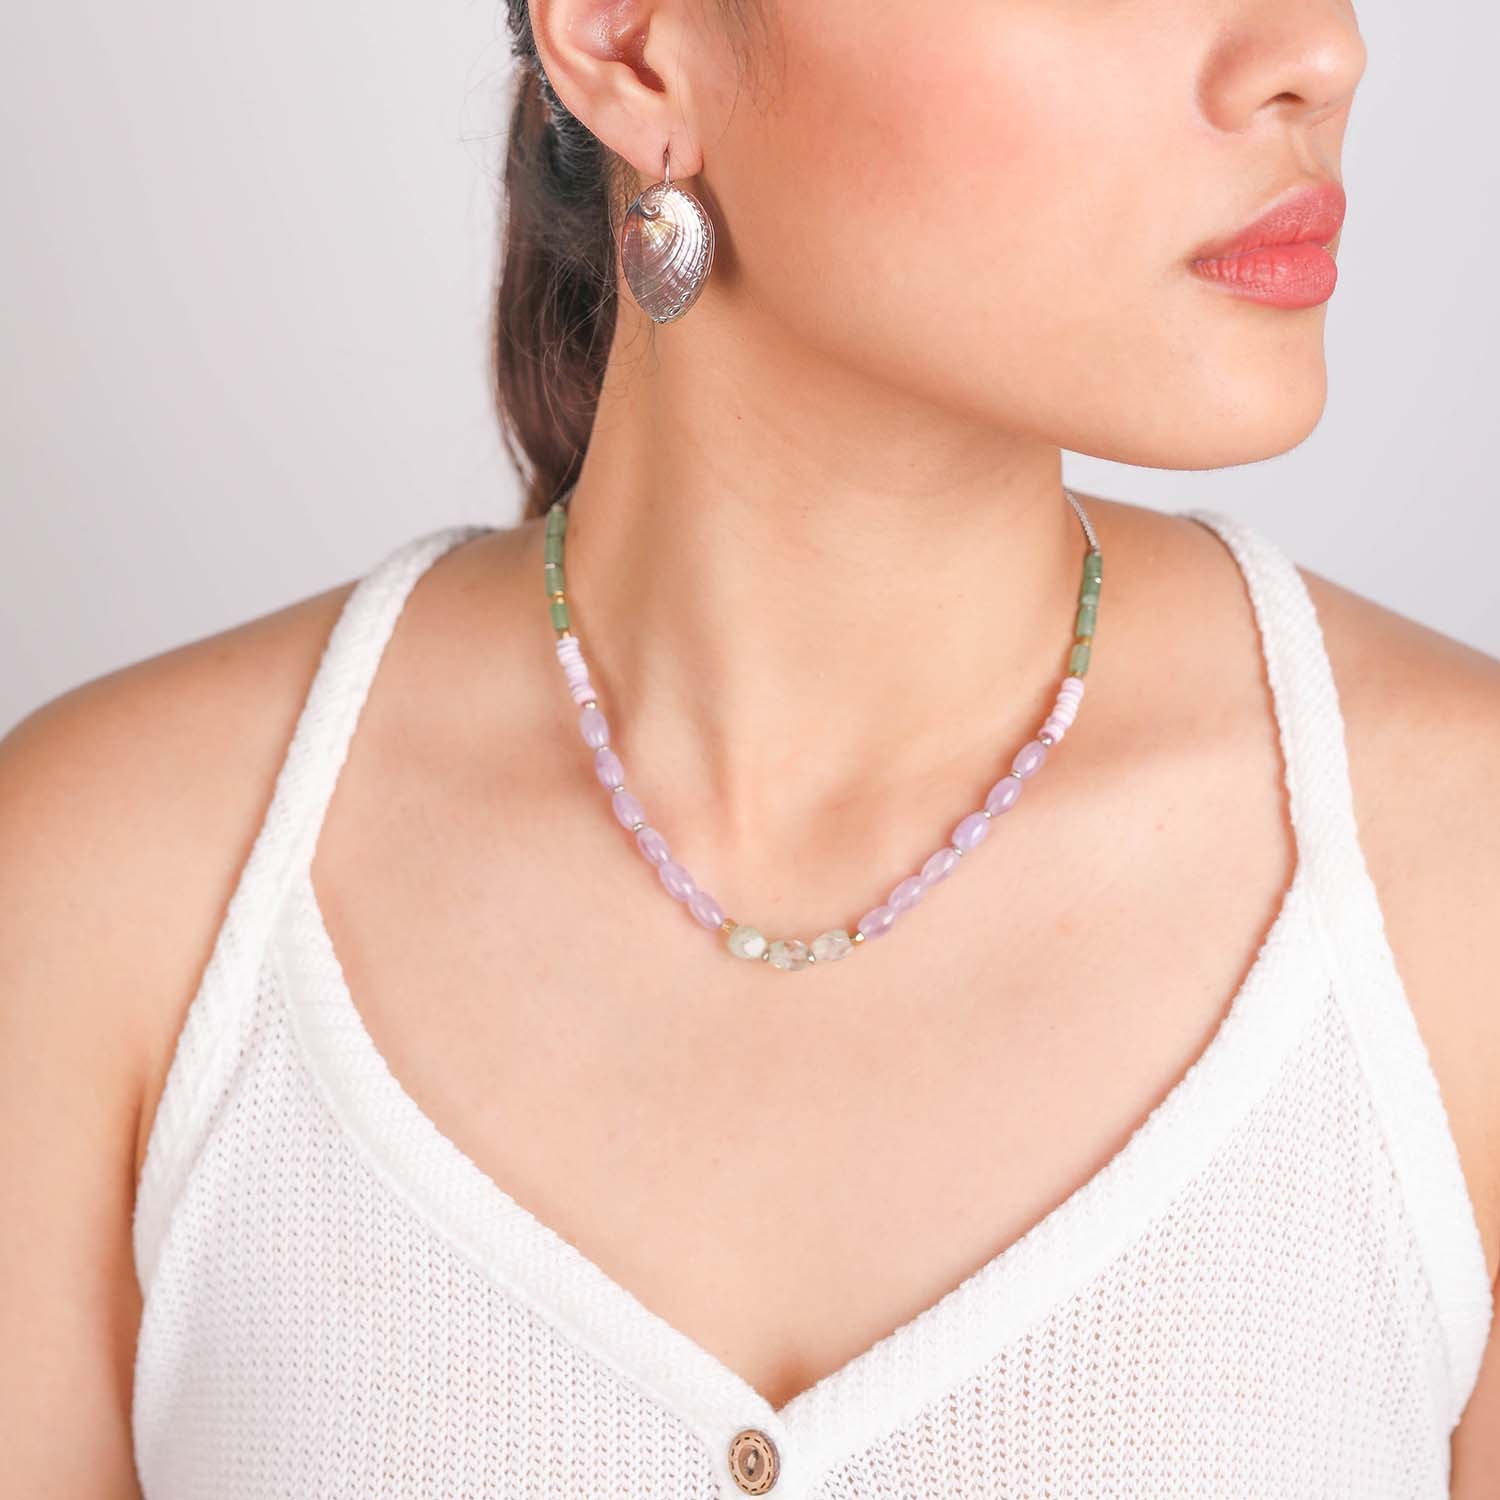 Nature Bijoux Short Necklace / Amethyst, Aventurine, Quartz / Light Purple, Green / Fashion Jewelry / Water Lily